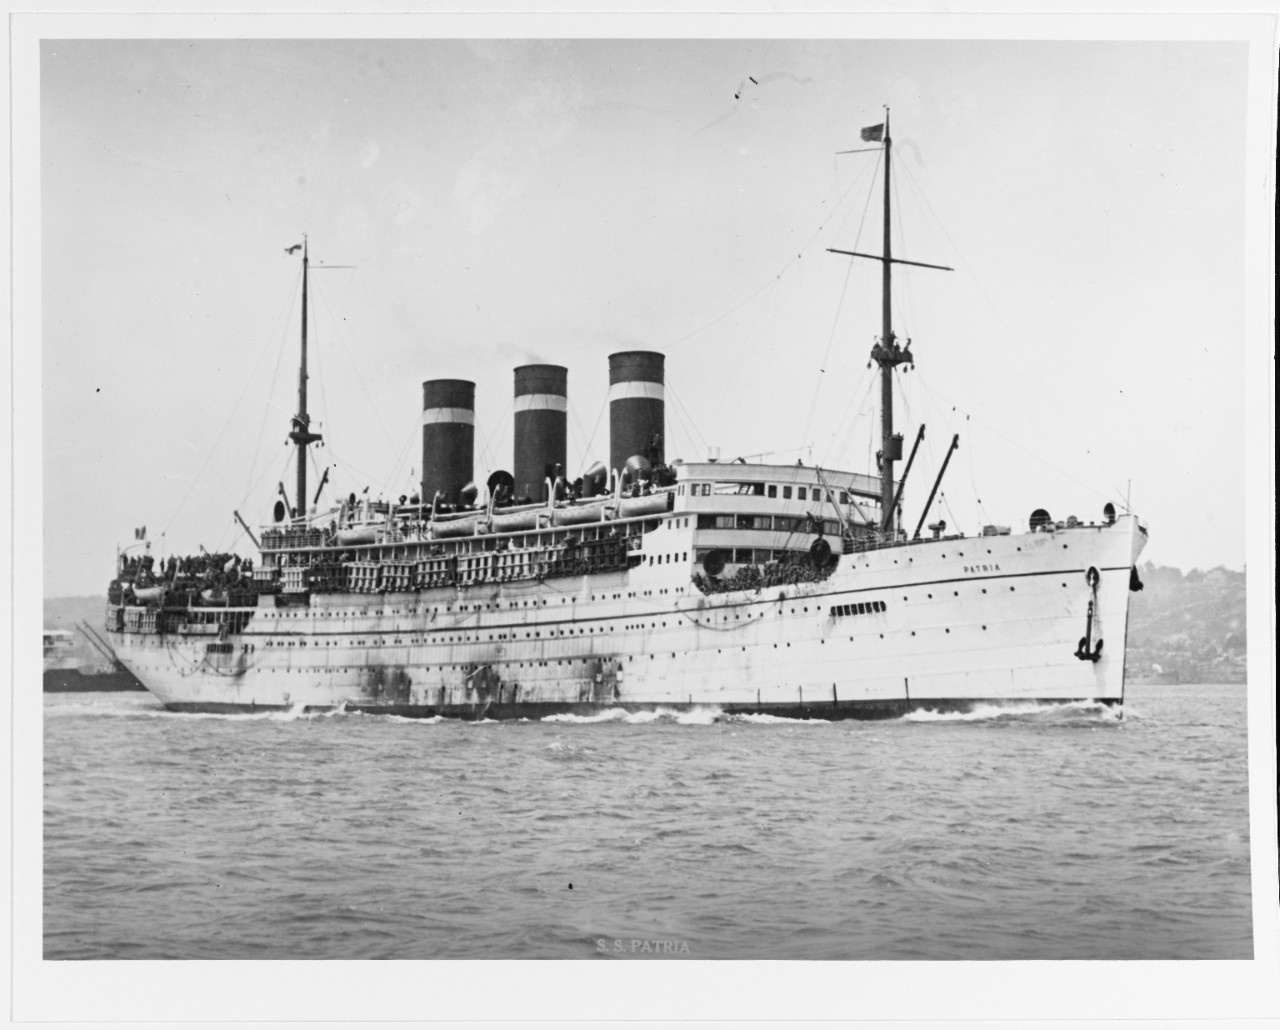 SS PATRIA (French passenger liner)